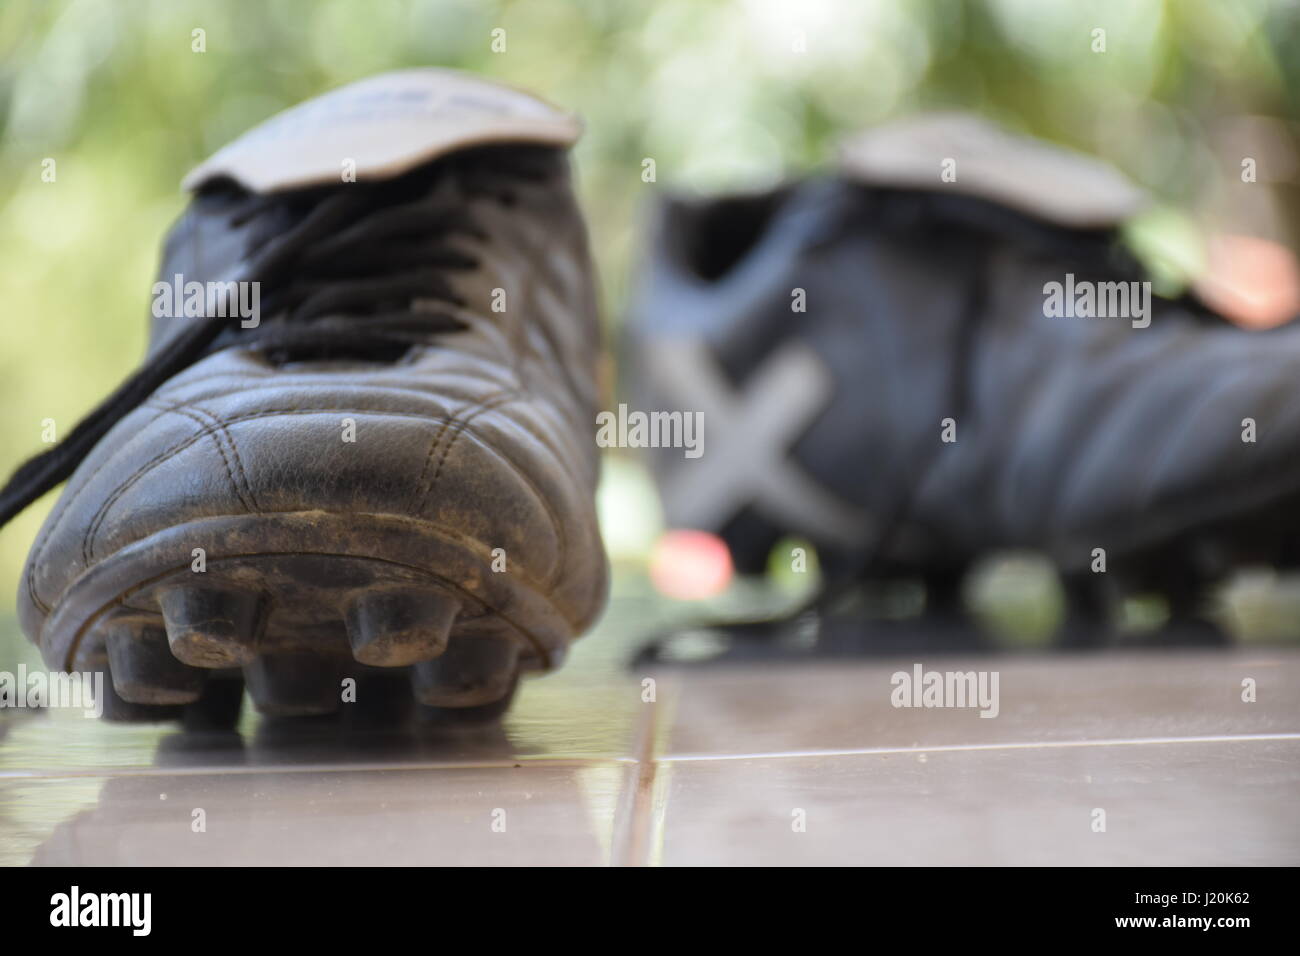 adidas football shoe Stock Photo